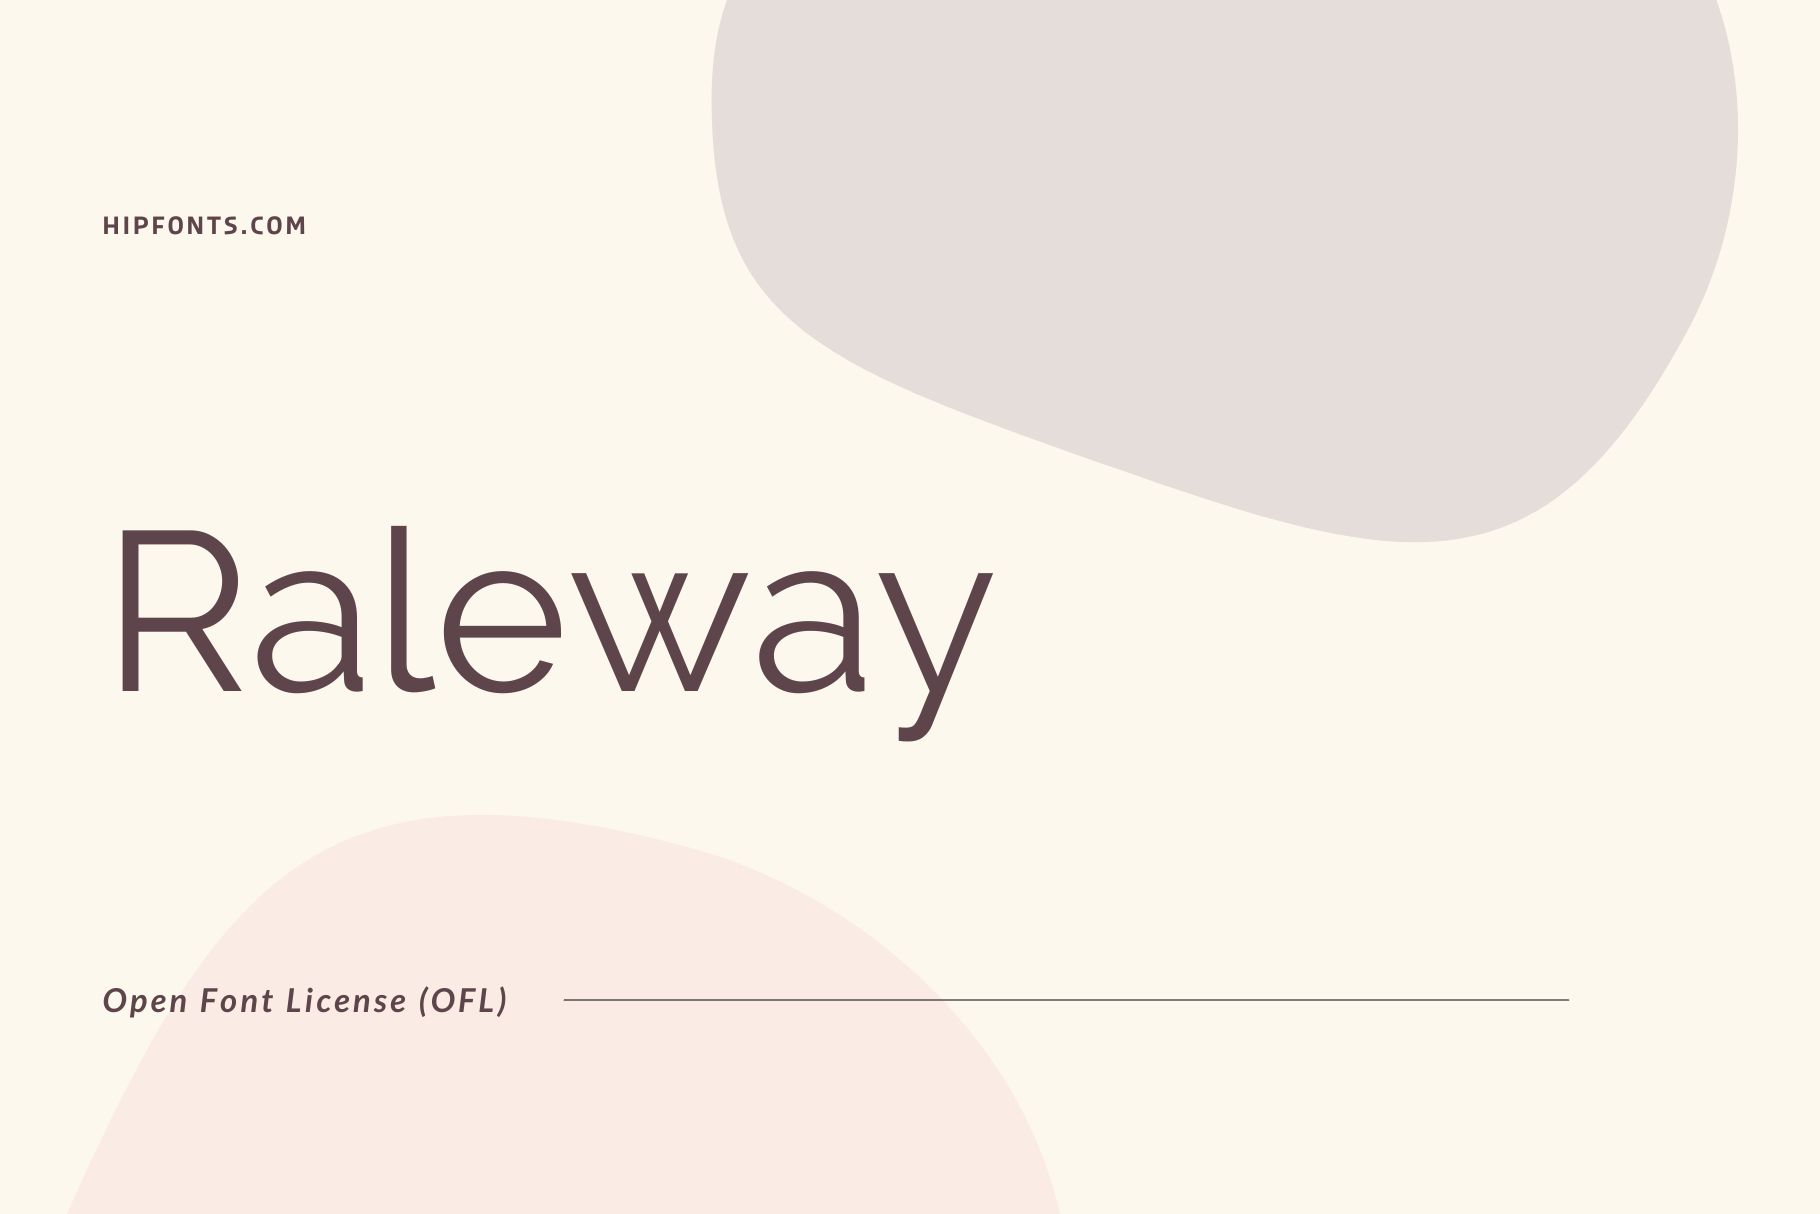 Raleway free font